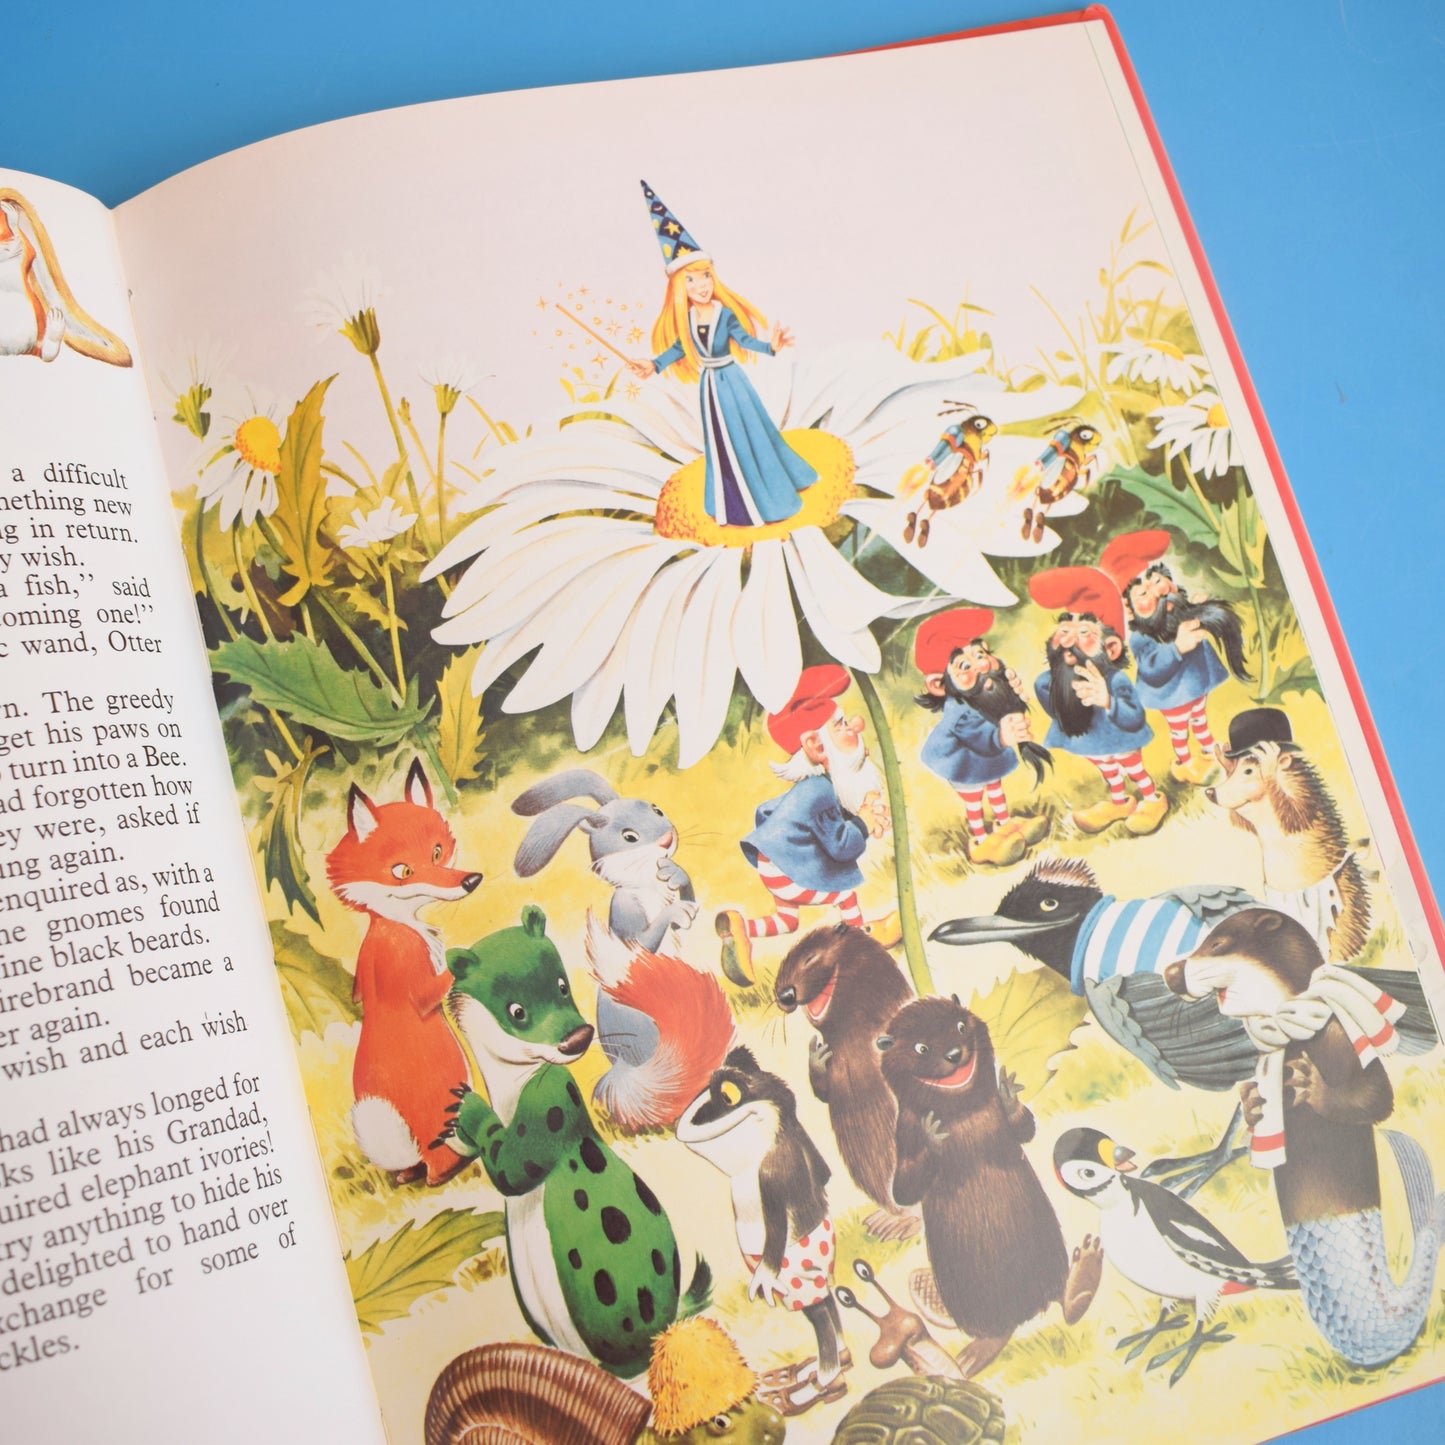 Vintage 1980s Books - The Woodland Folk